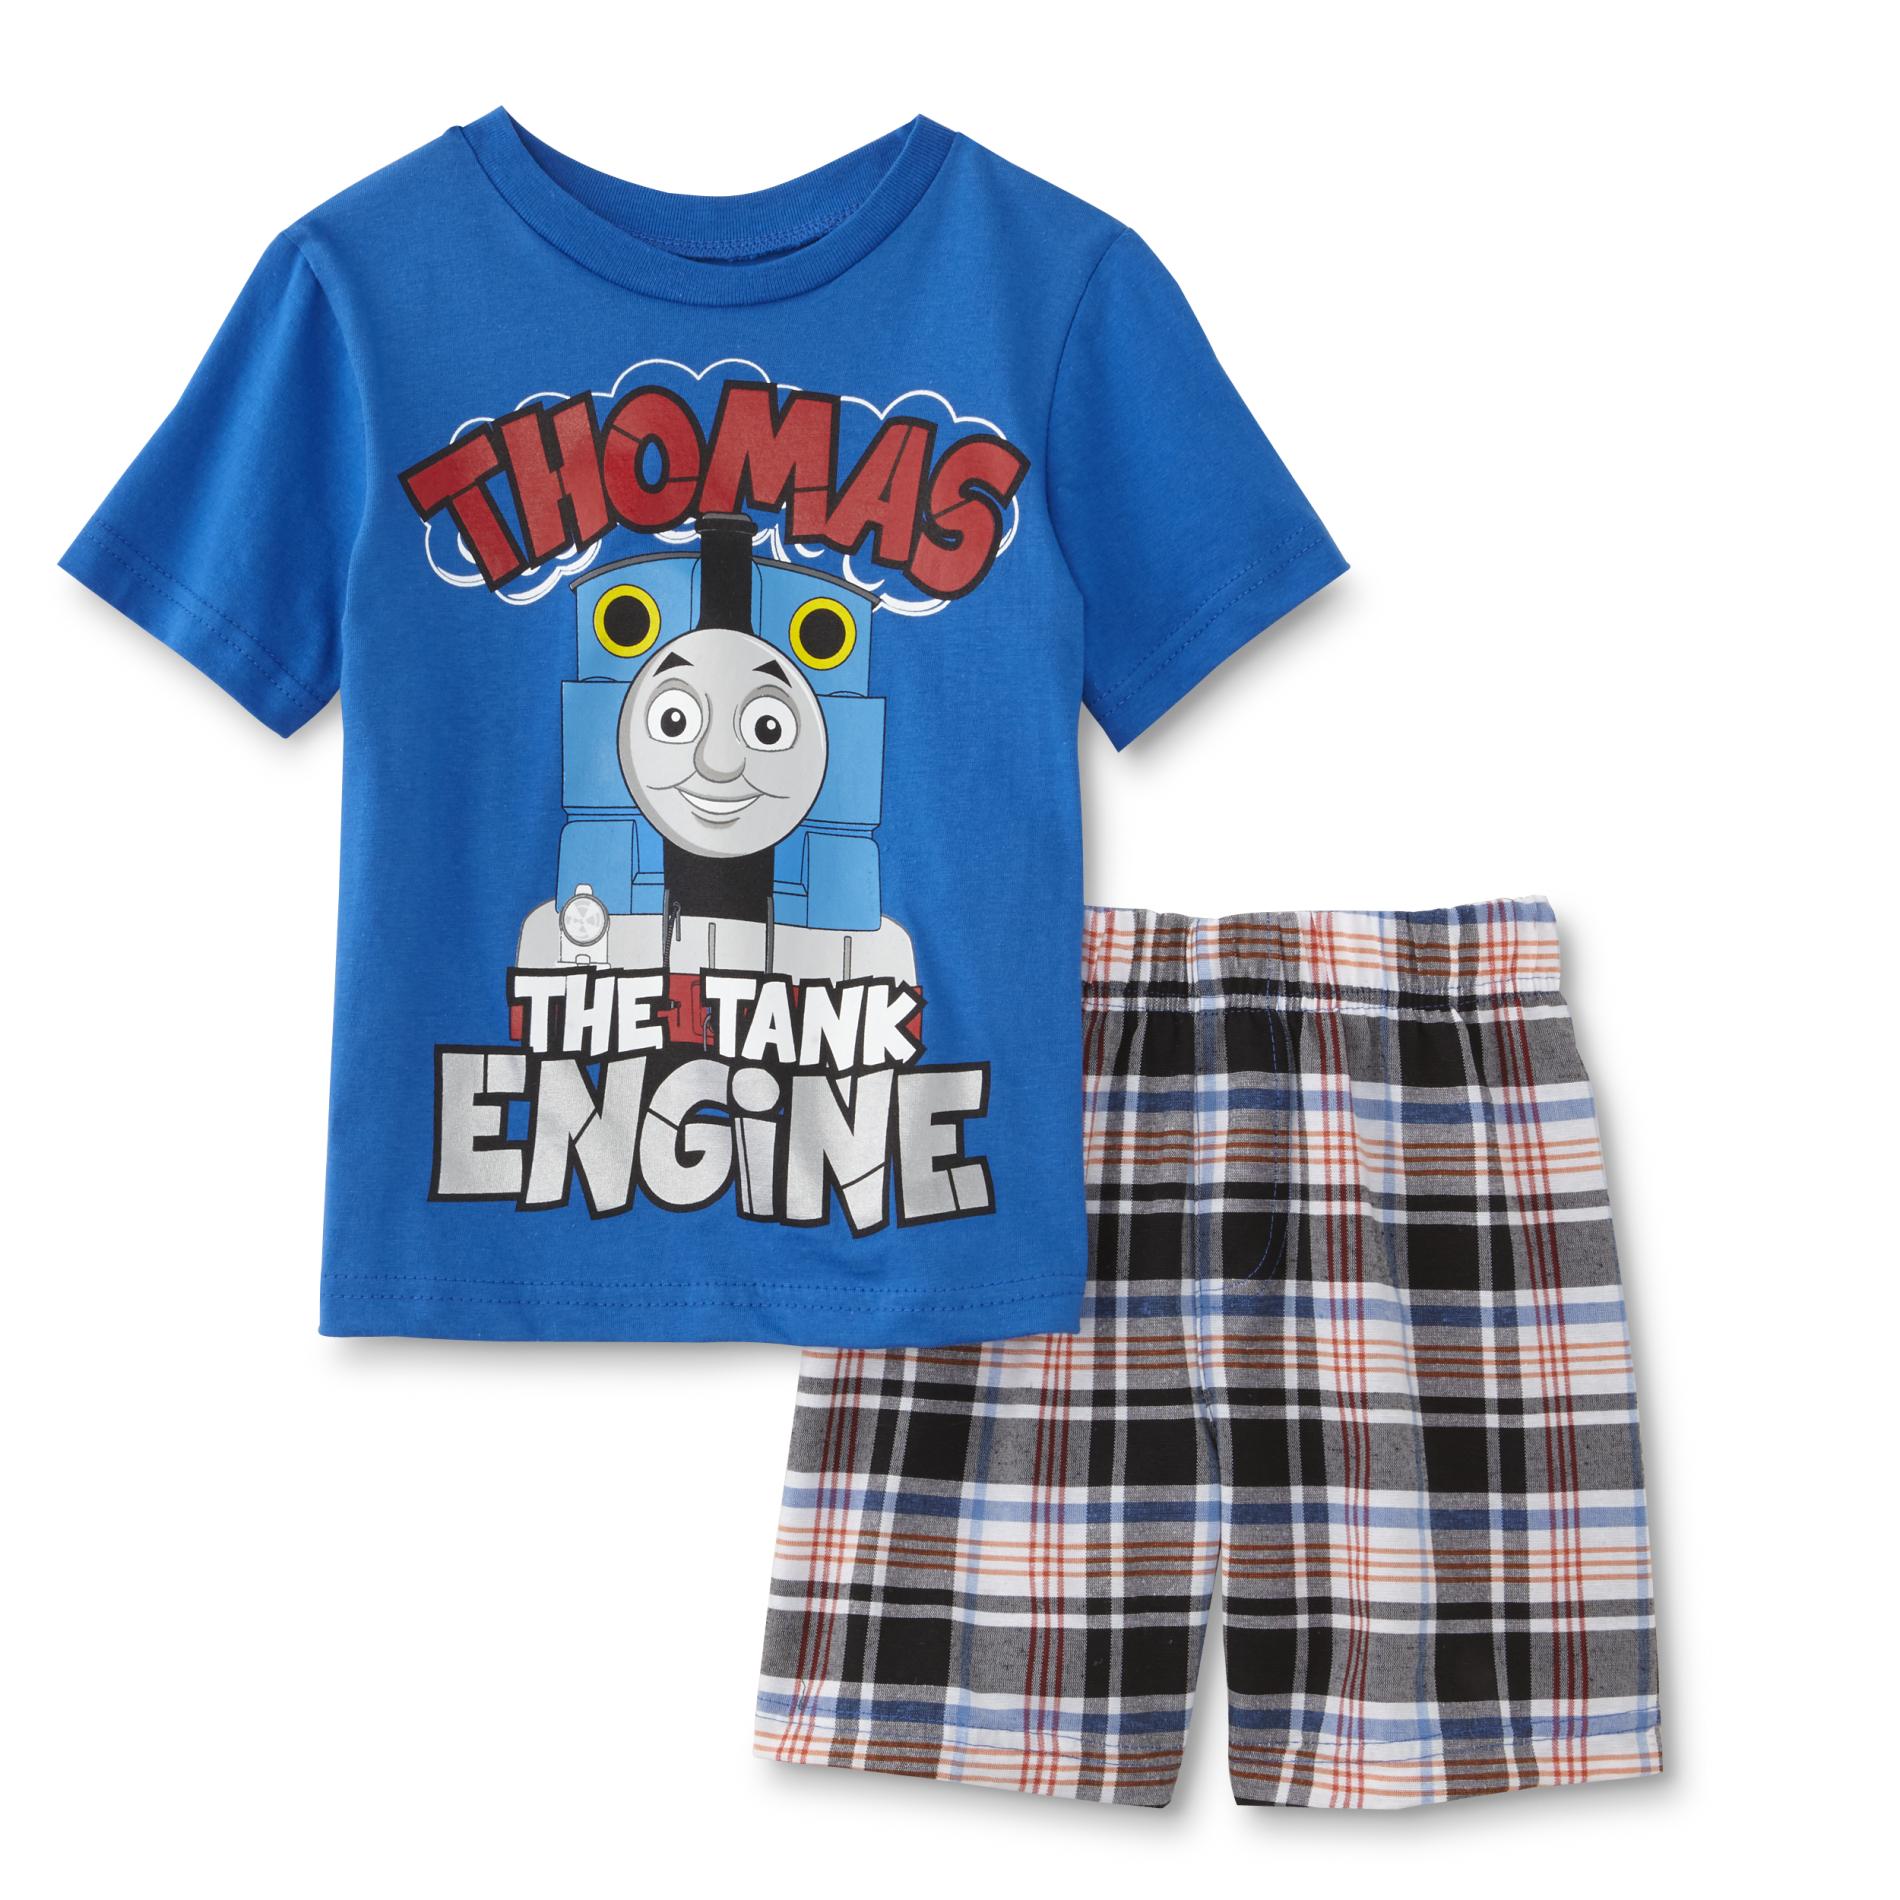 Thomas the Tank Engine Infant & Toddler Boys' T-Shirt & Shorts - Plaid